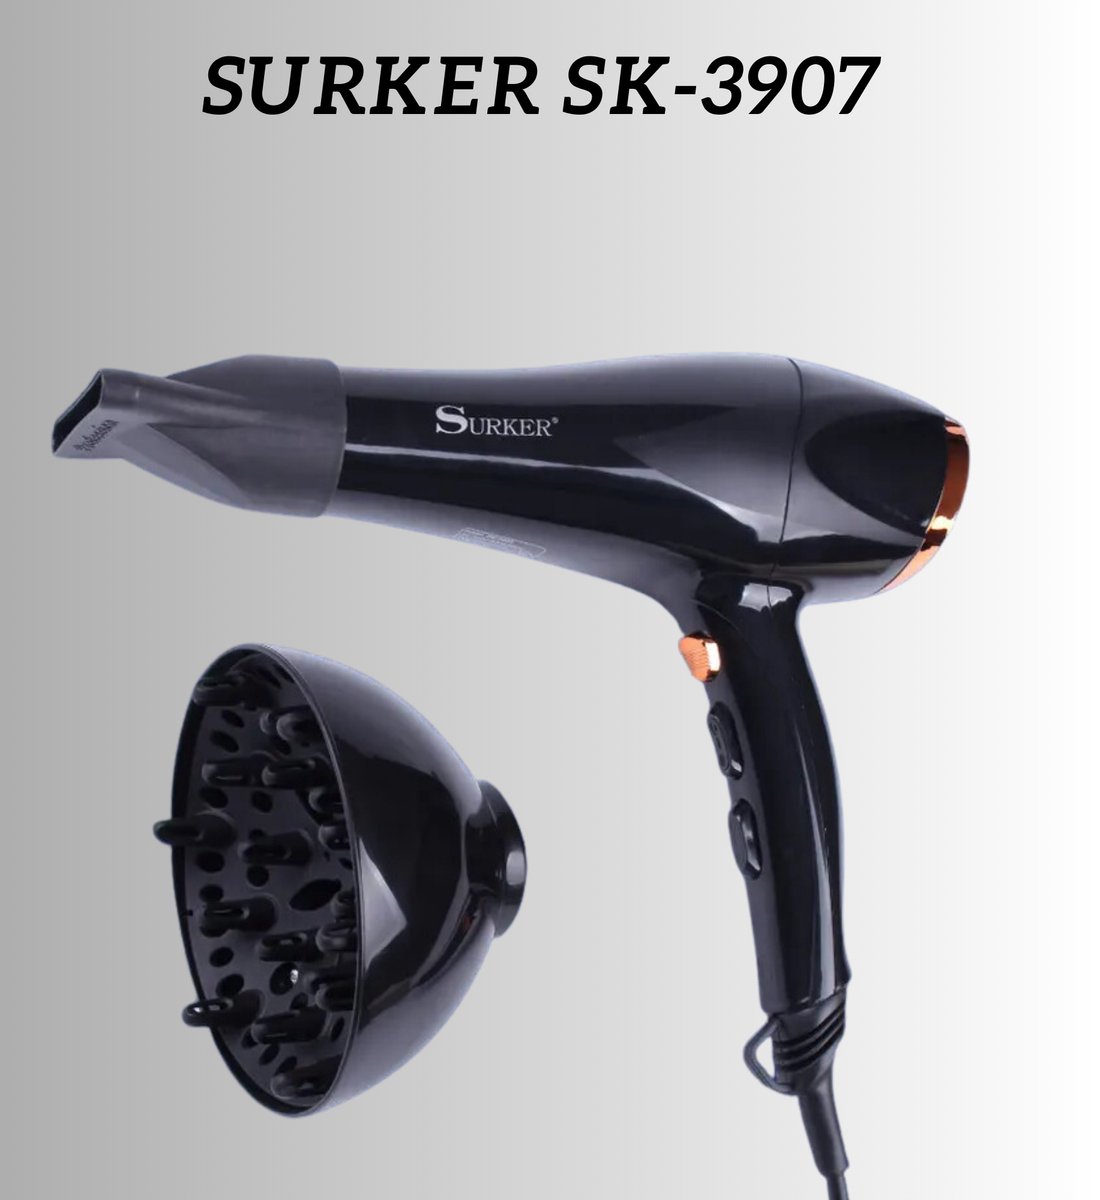 Surker SK-3907 - Proffesionele Haardroger - Krachtige Föhn - inc. blaasmond & diffuser - 2000 Watt